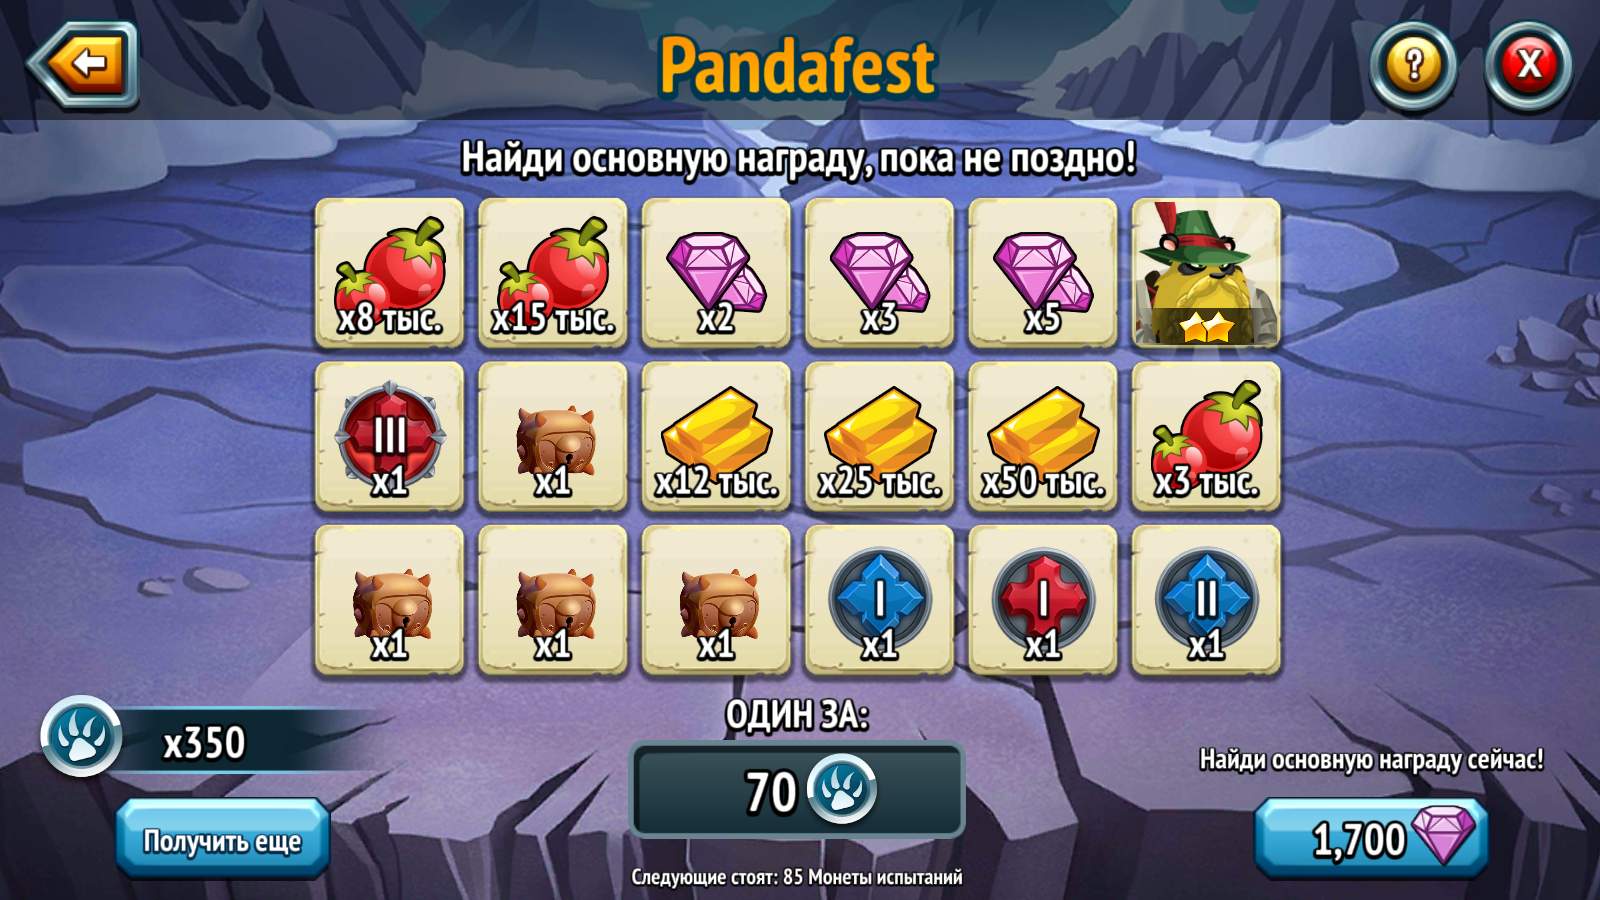 Pandafest